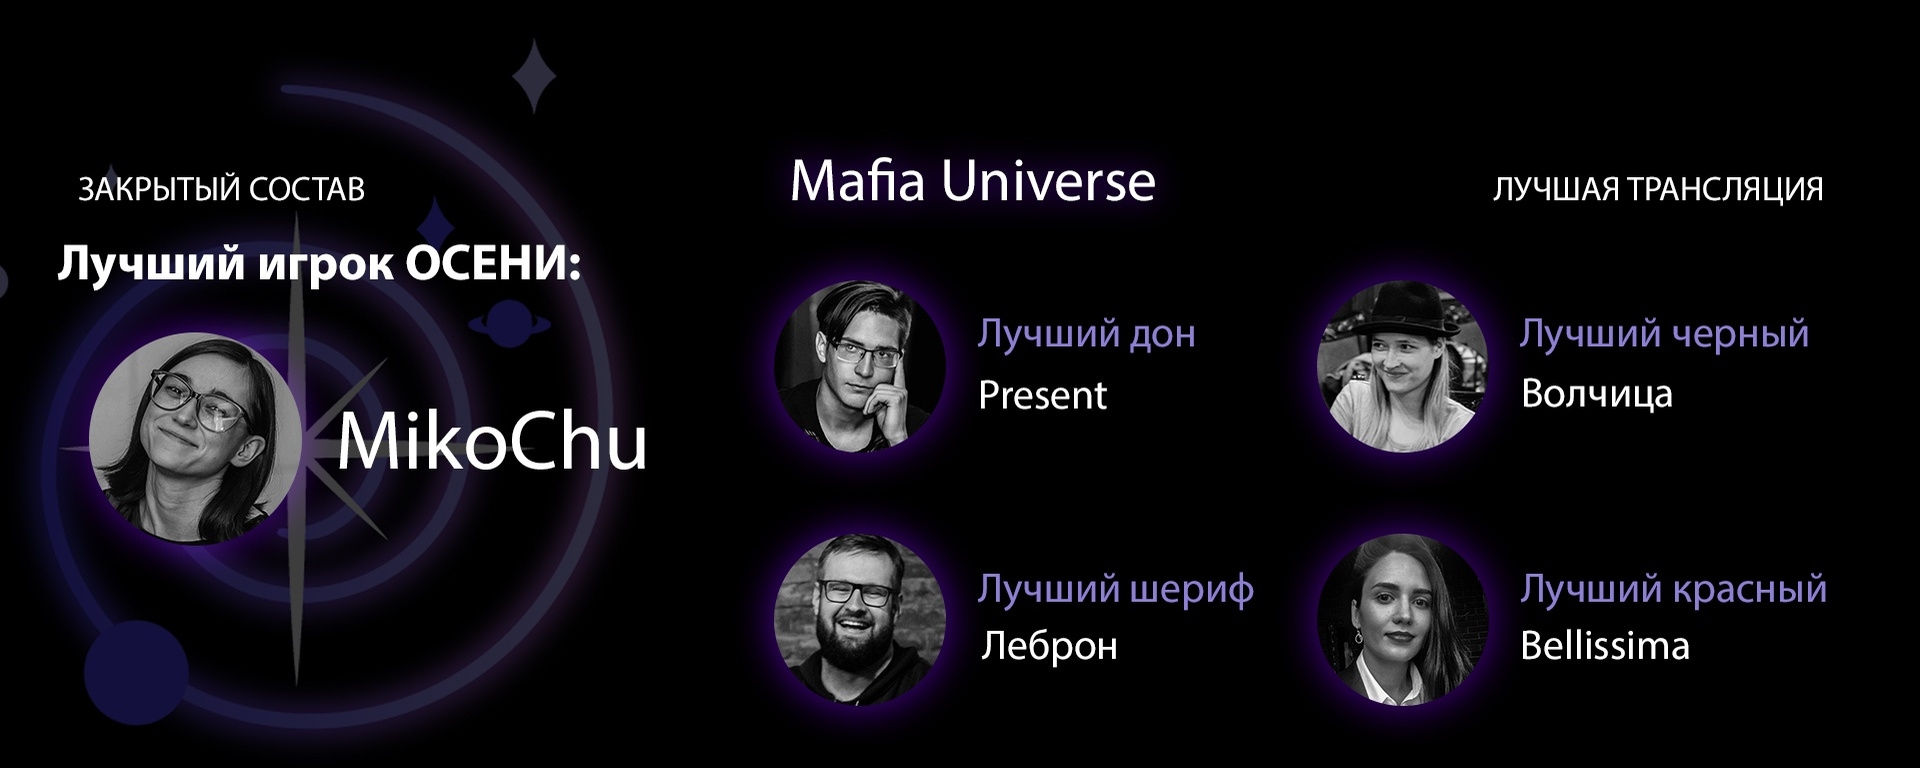 Mafia Universe SPb - фото 1